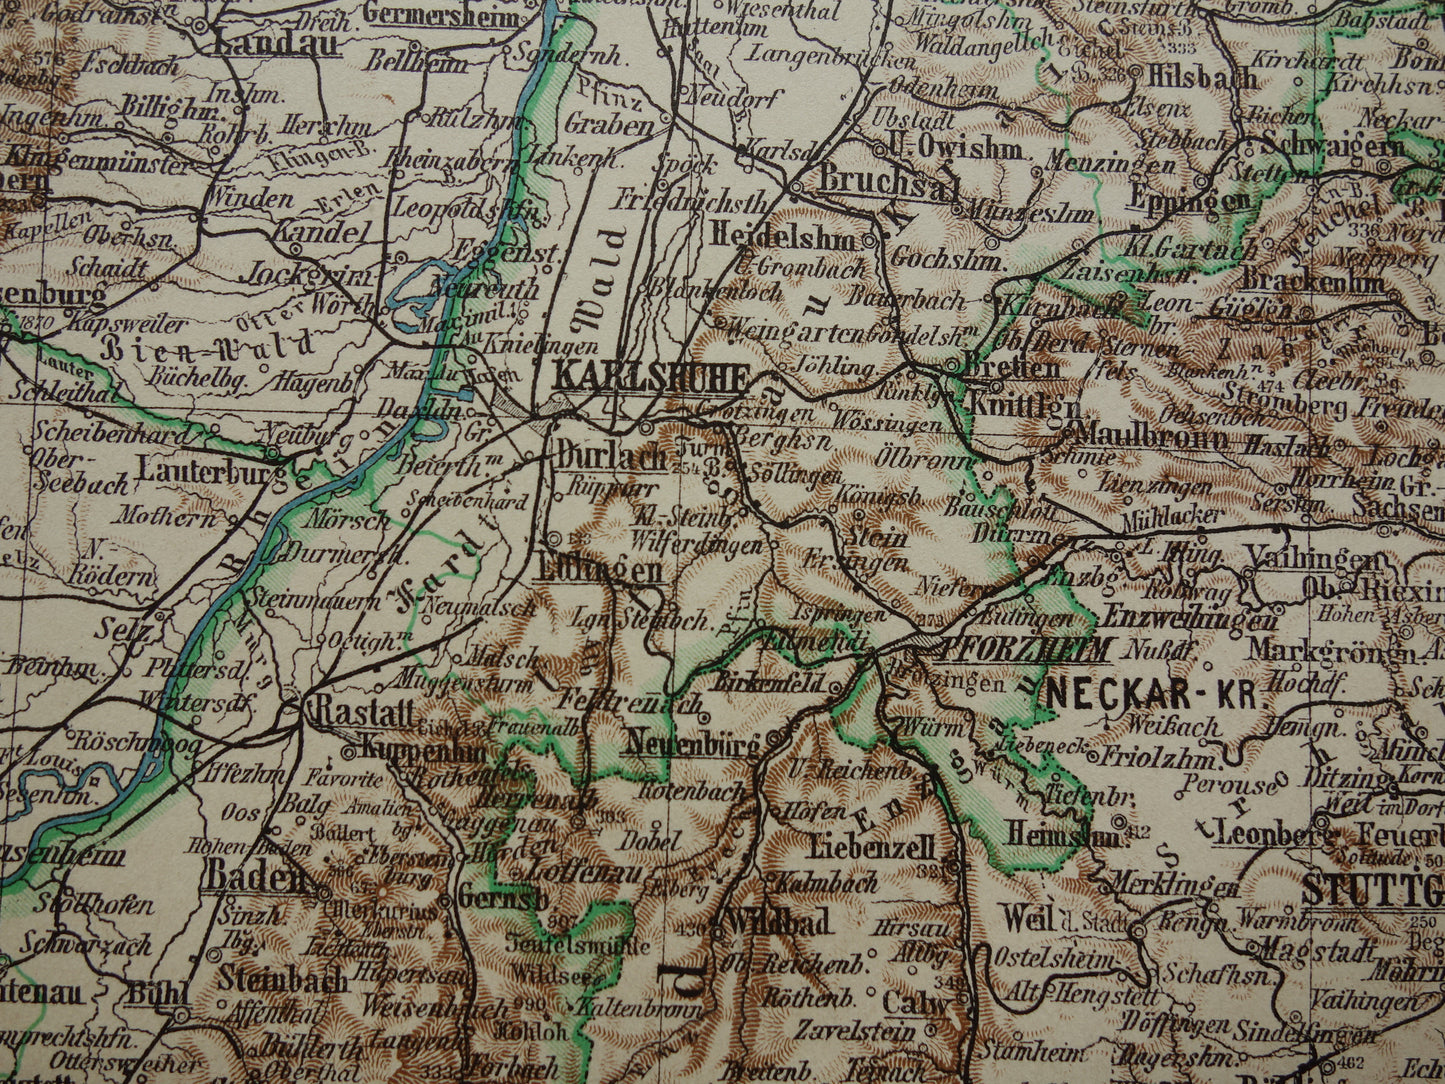 BADEN oude kaart van Baden Duitsland 1913 originele antieke Duitse landkaart Stuttgart Karlsruhe